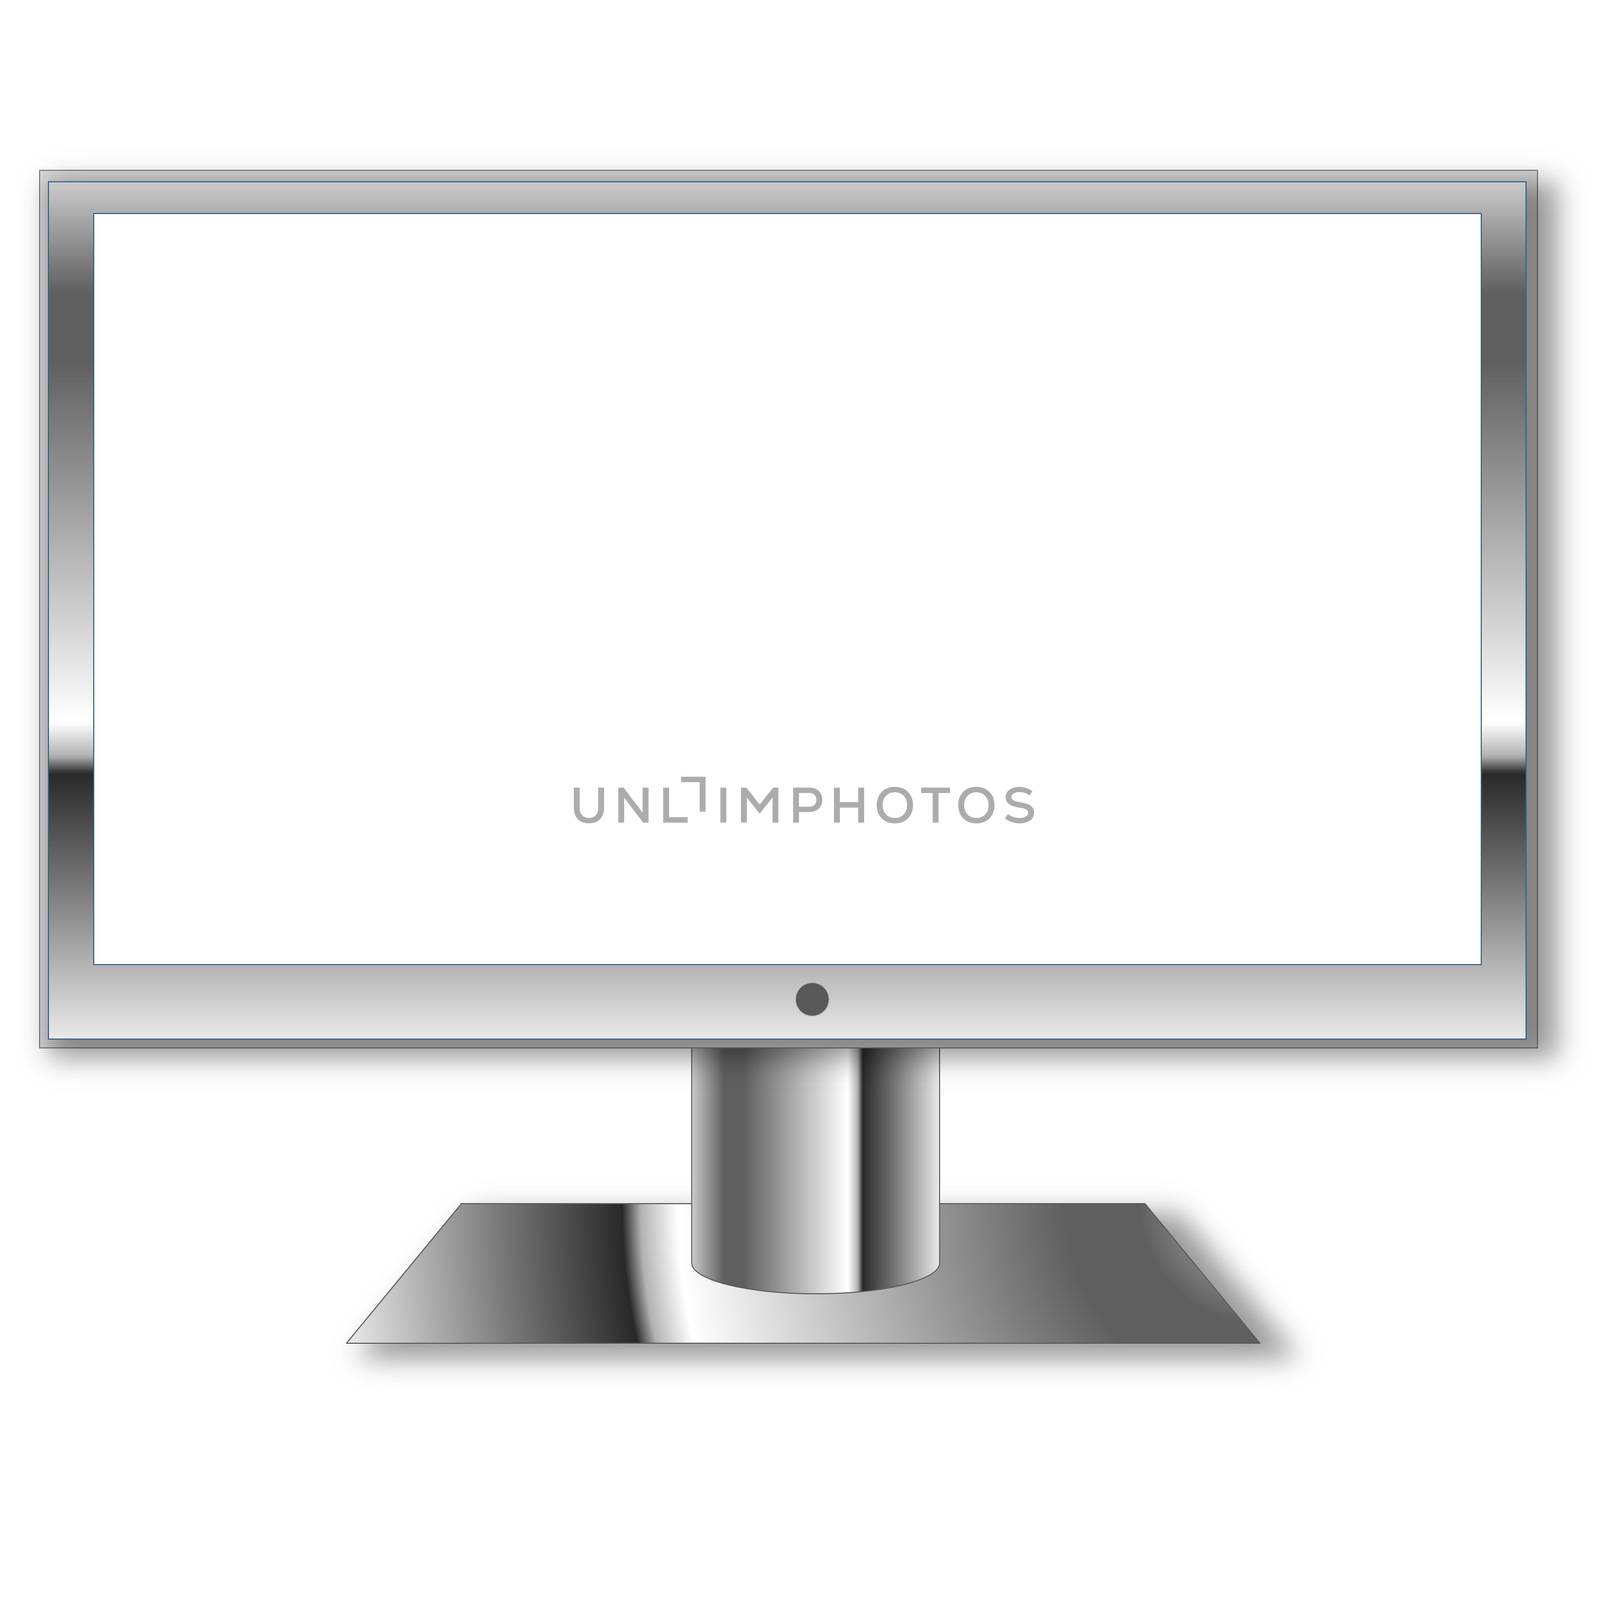 Grey metallic computer screen in white background